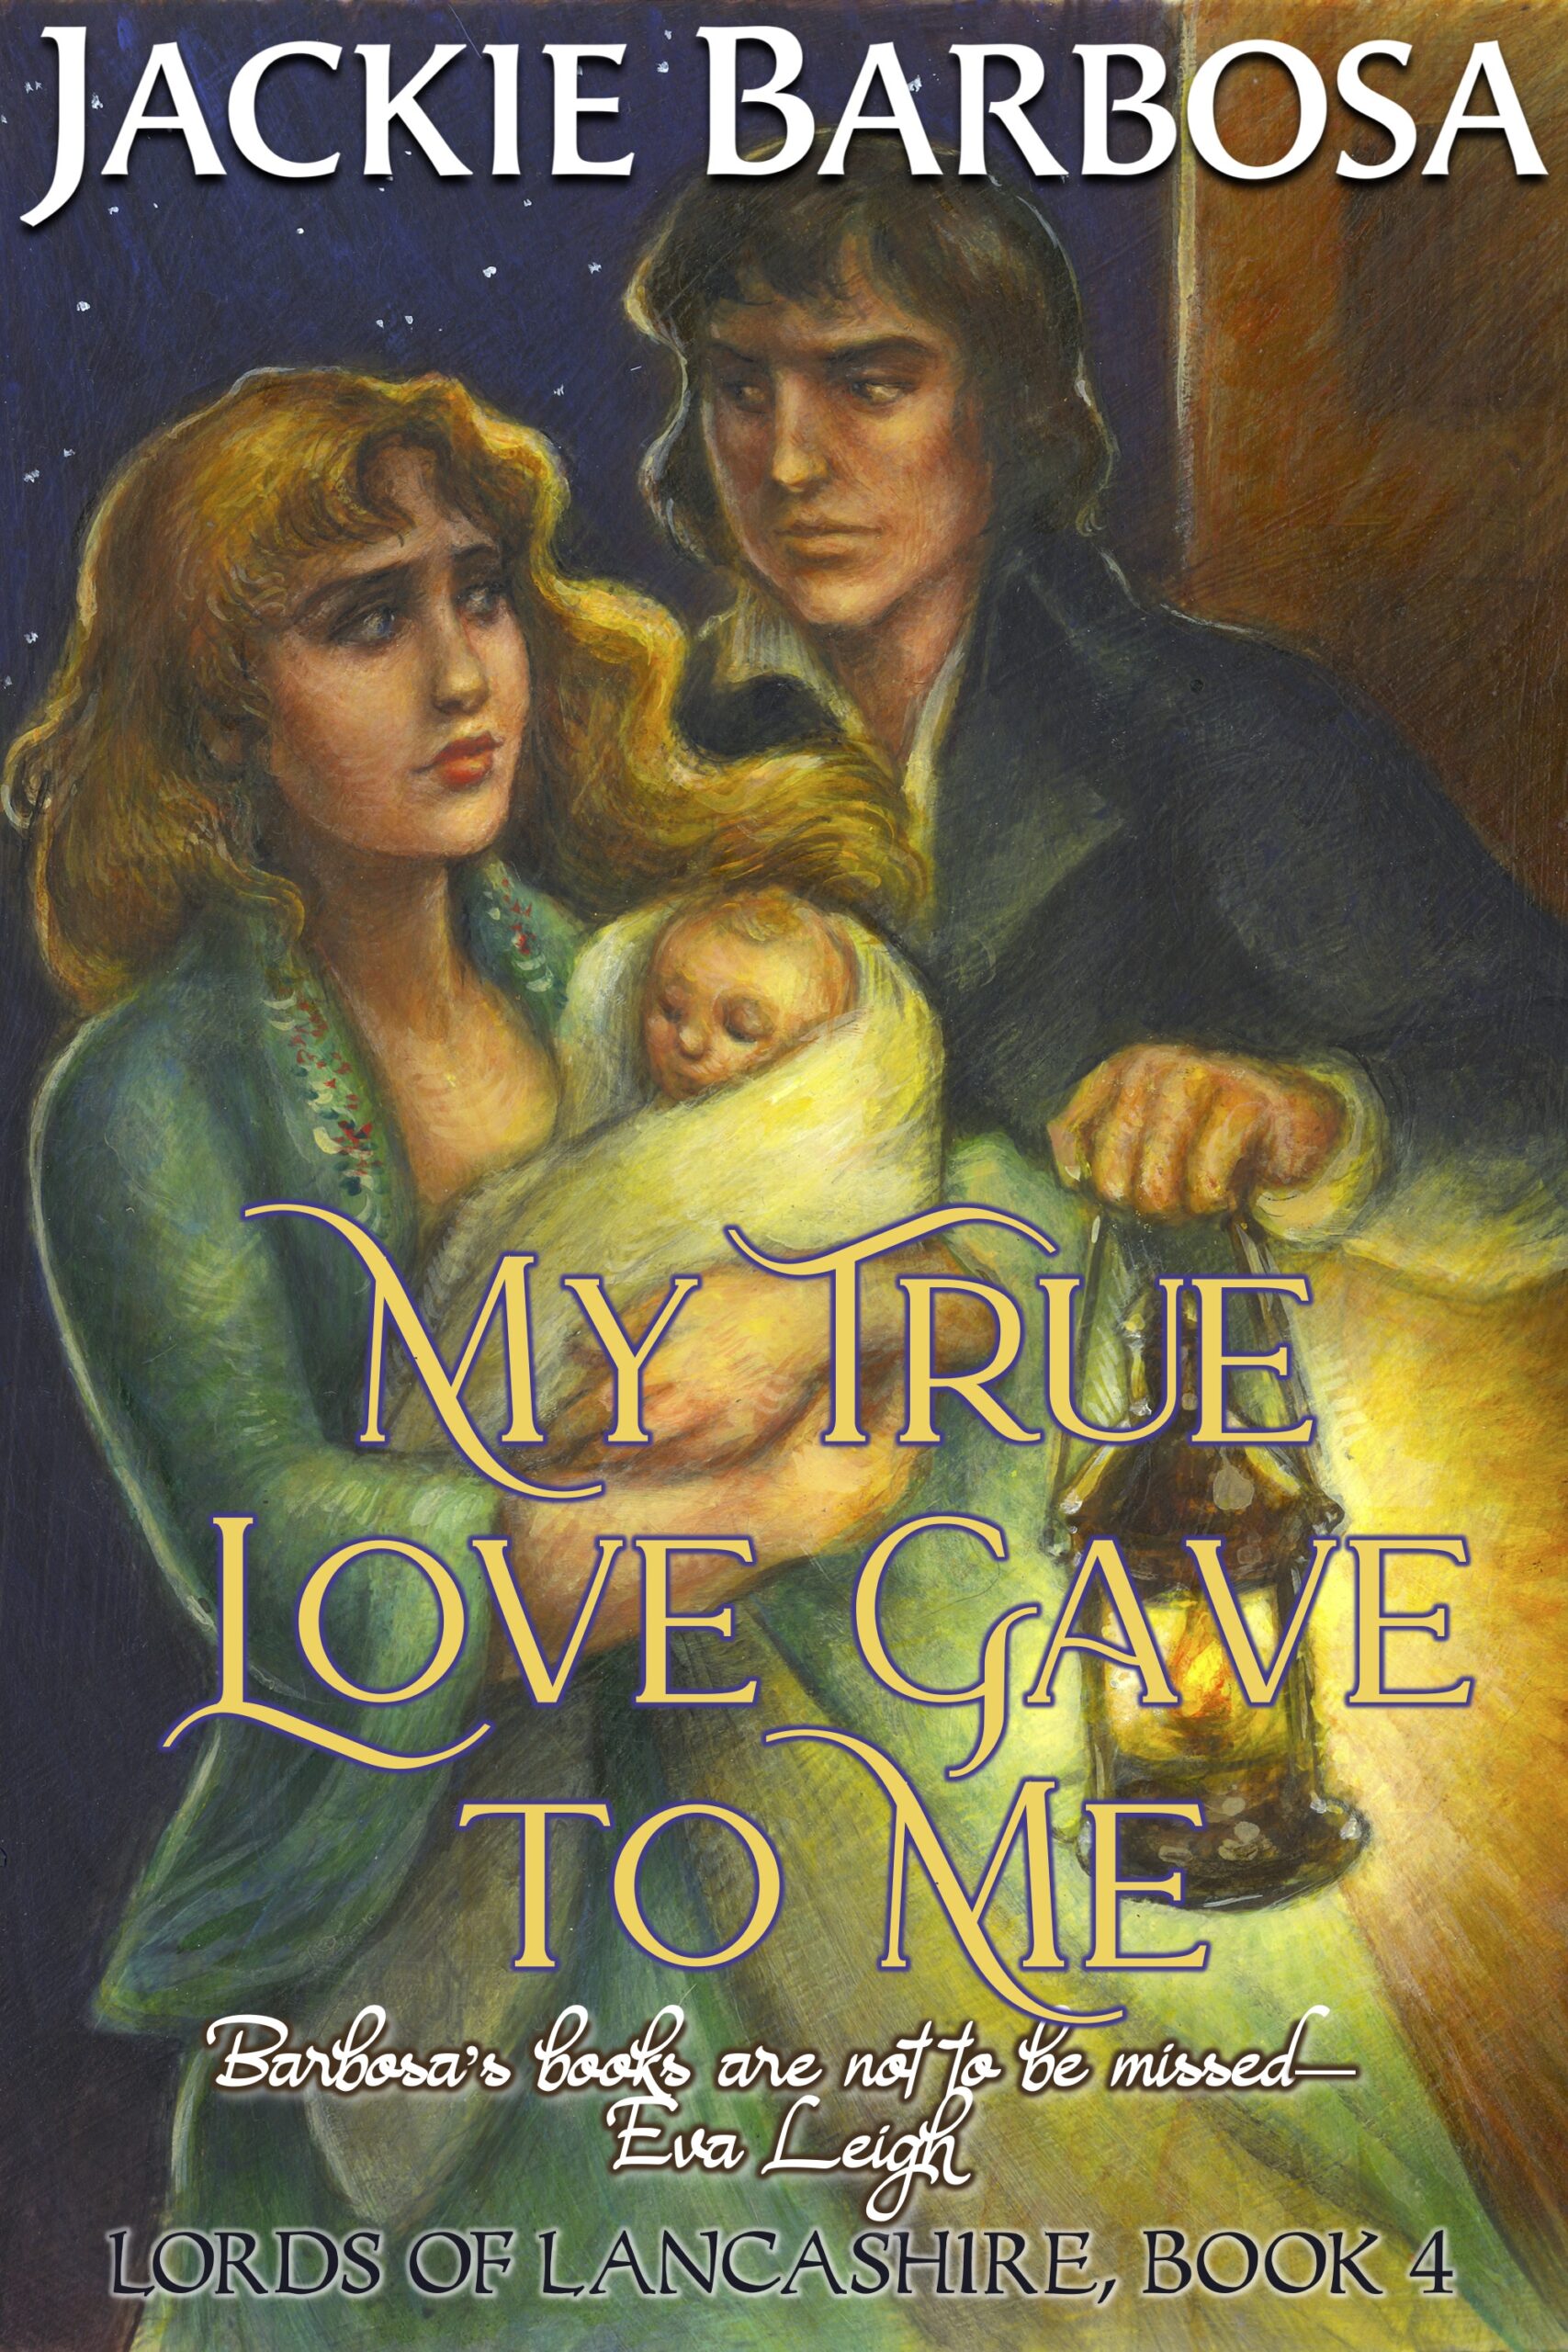 My True Love Gave to Me by Jackie Barbosa